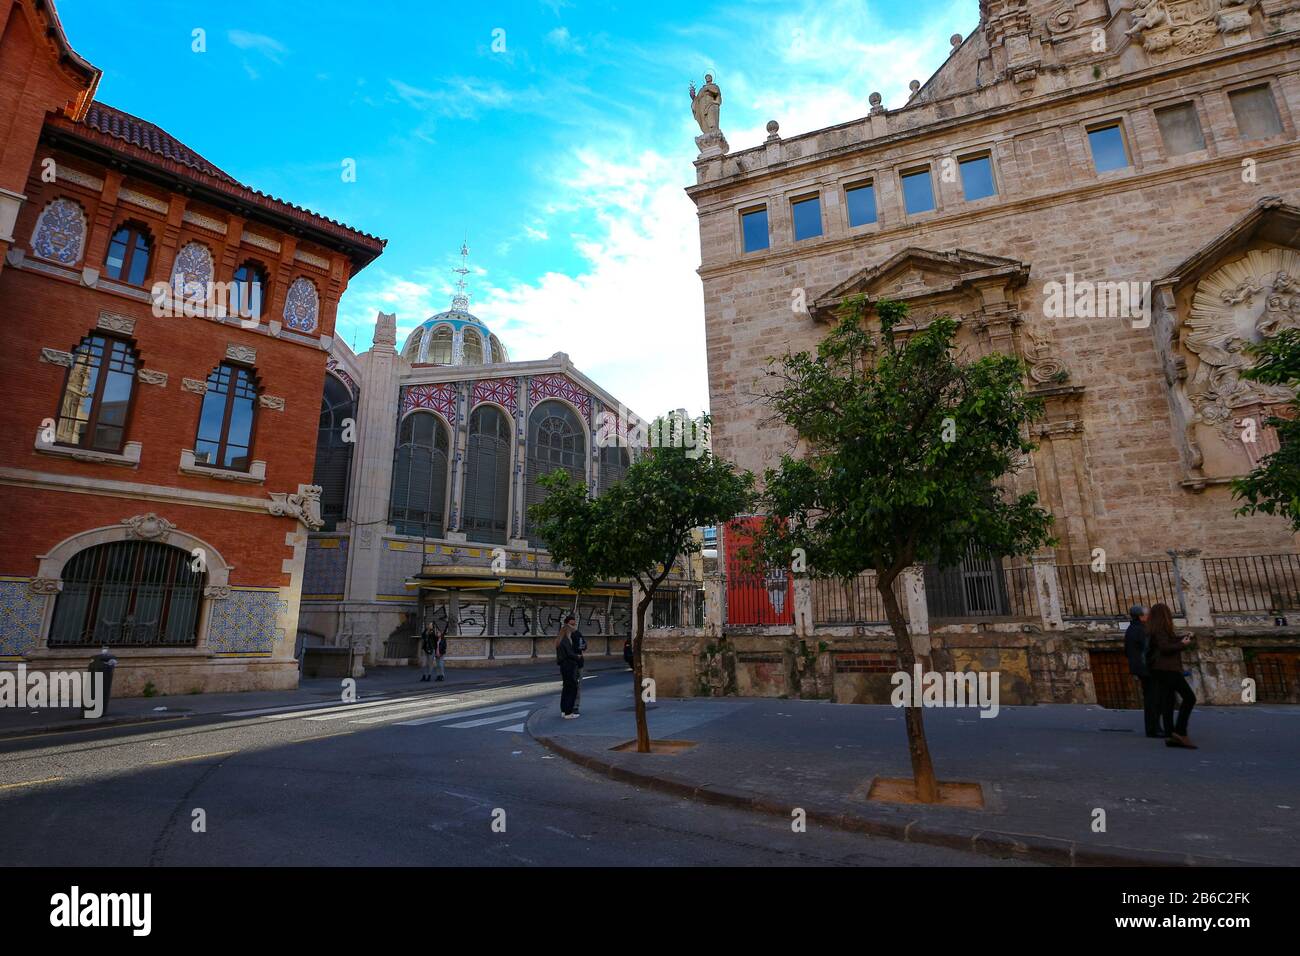 Street scene in historic Valencia, Spain, with the church Església de Sant Joan del Mercat and the Central Market building. Stock Photo